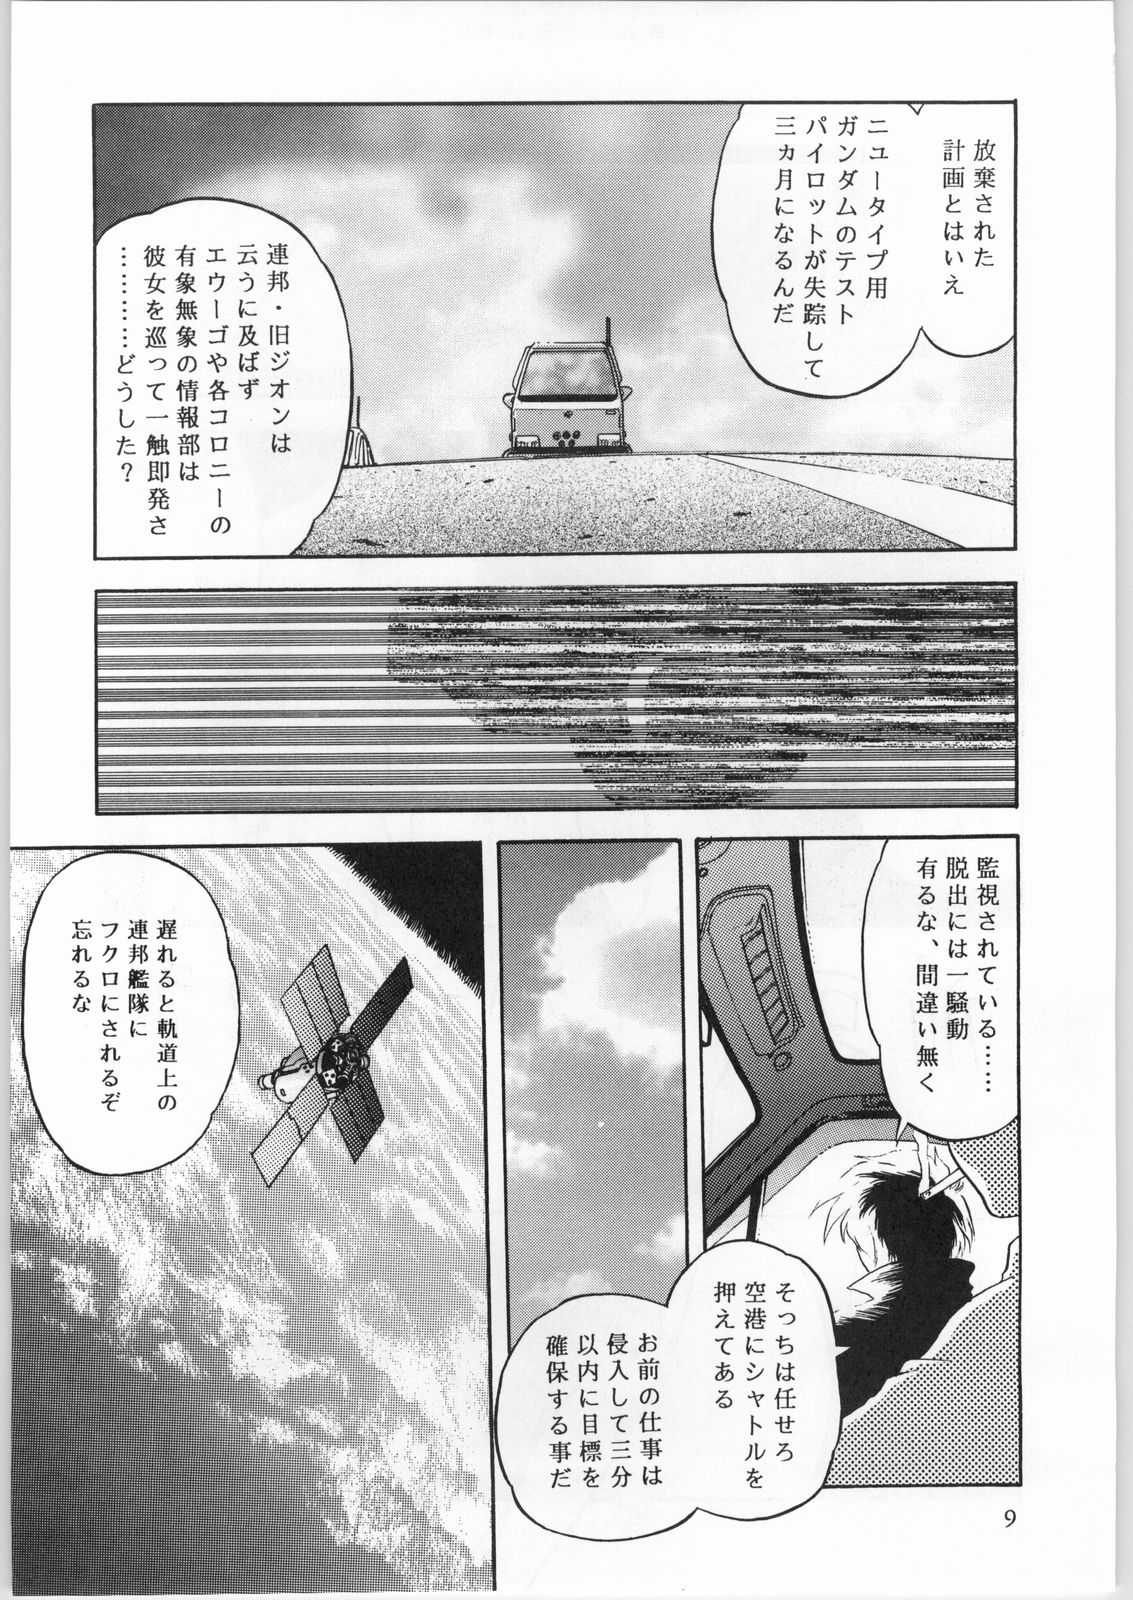 [Gundam] Crossing the Line Round Three (AXZ) 